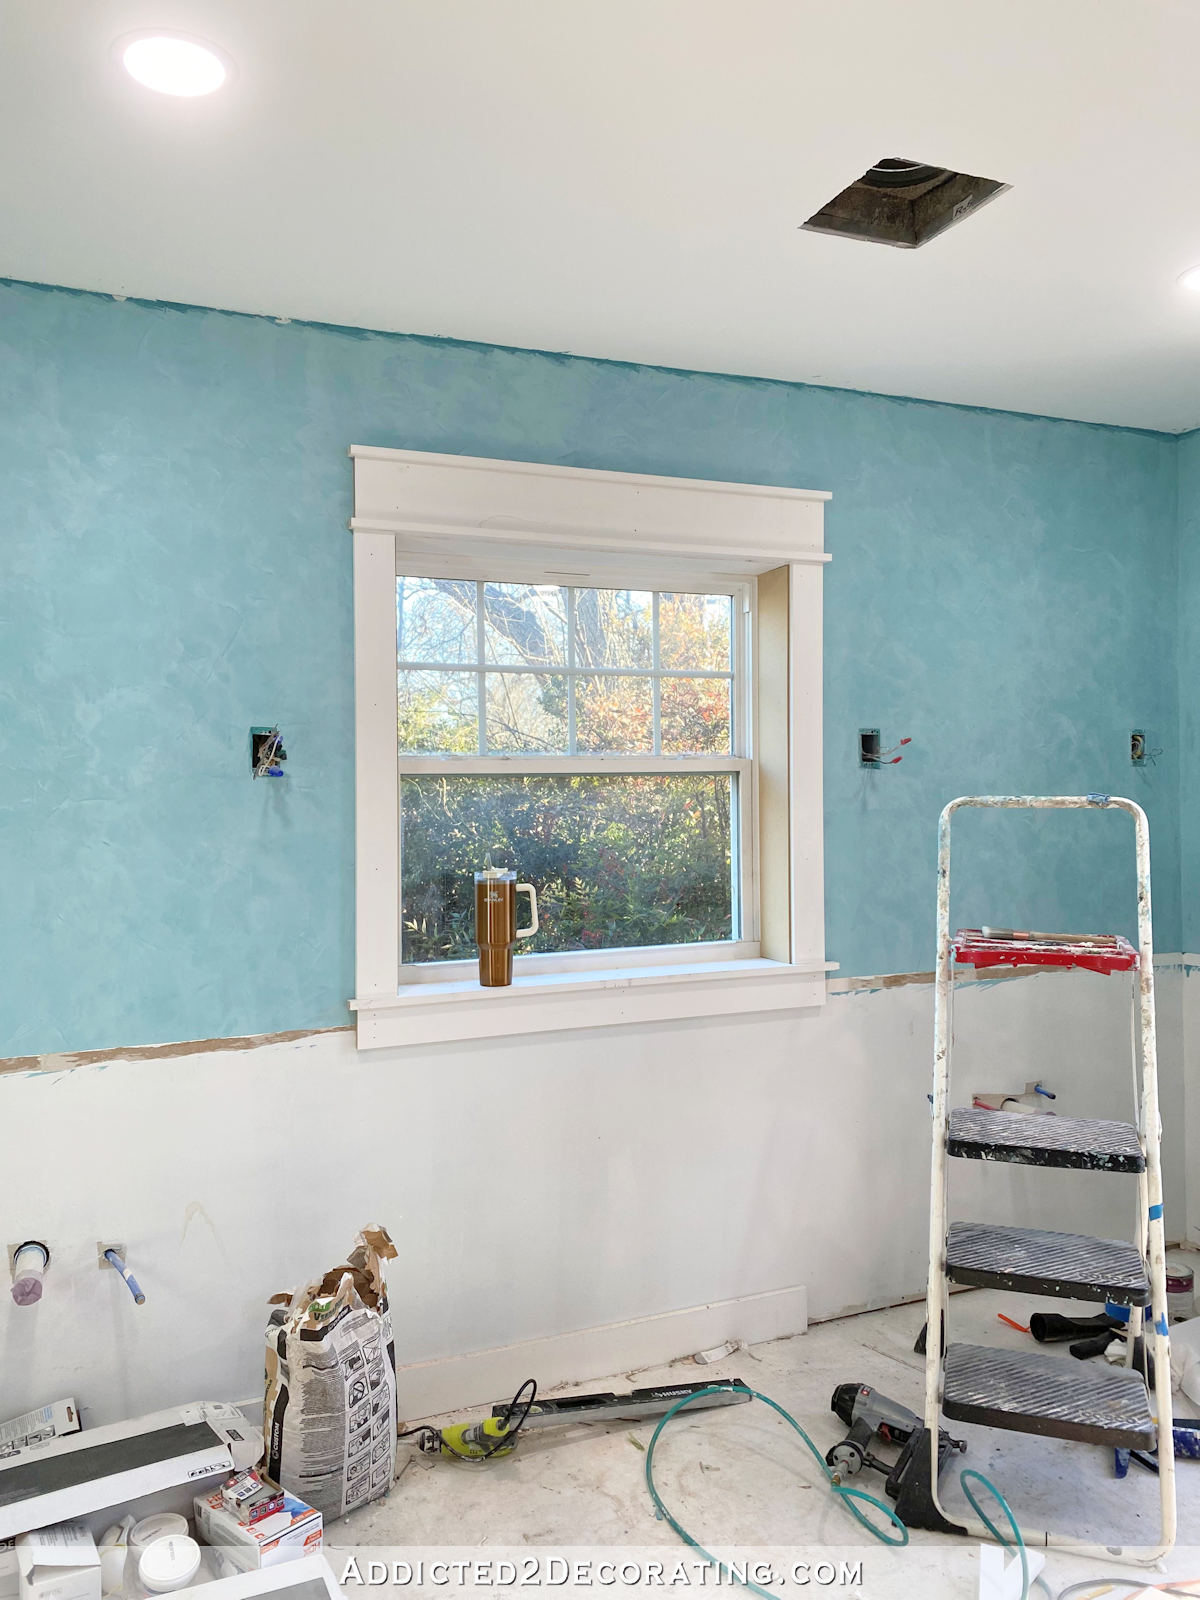 Master Bathroom Progress – Window Trimmed, Sconces Installed, Mirror Hung